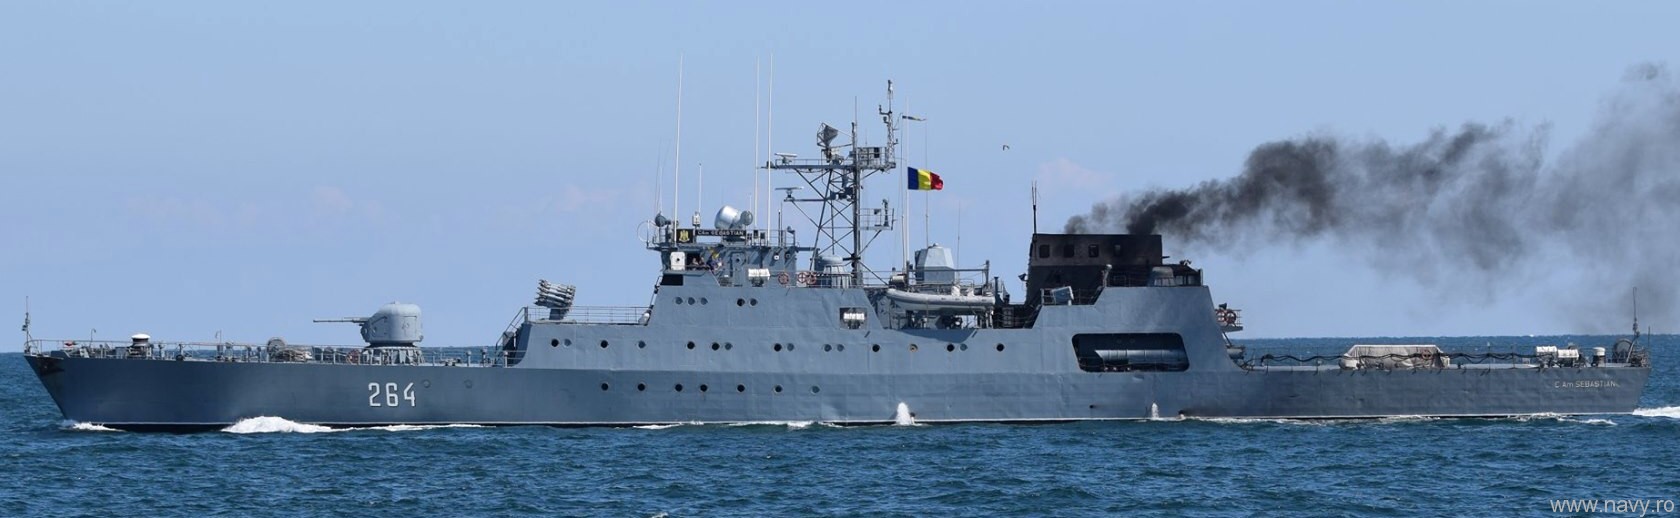 contraamiral eustatiu sebastian tetal ii class corvette romanian navy forțele navale române 16x